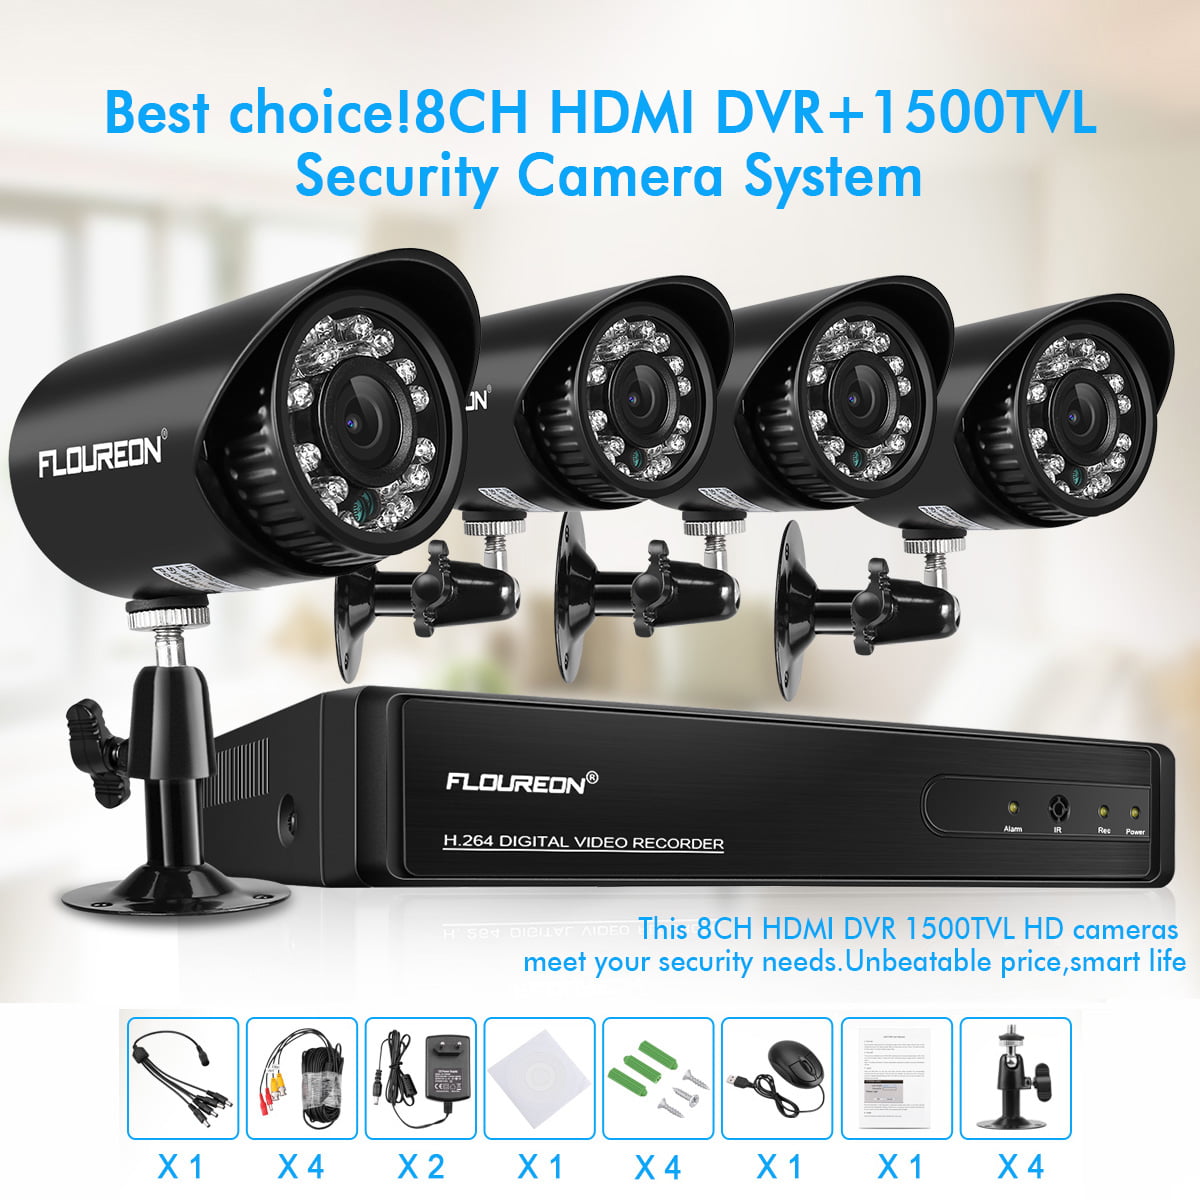 pricesmart security cameras